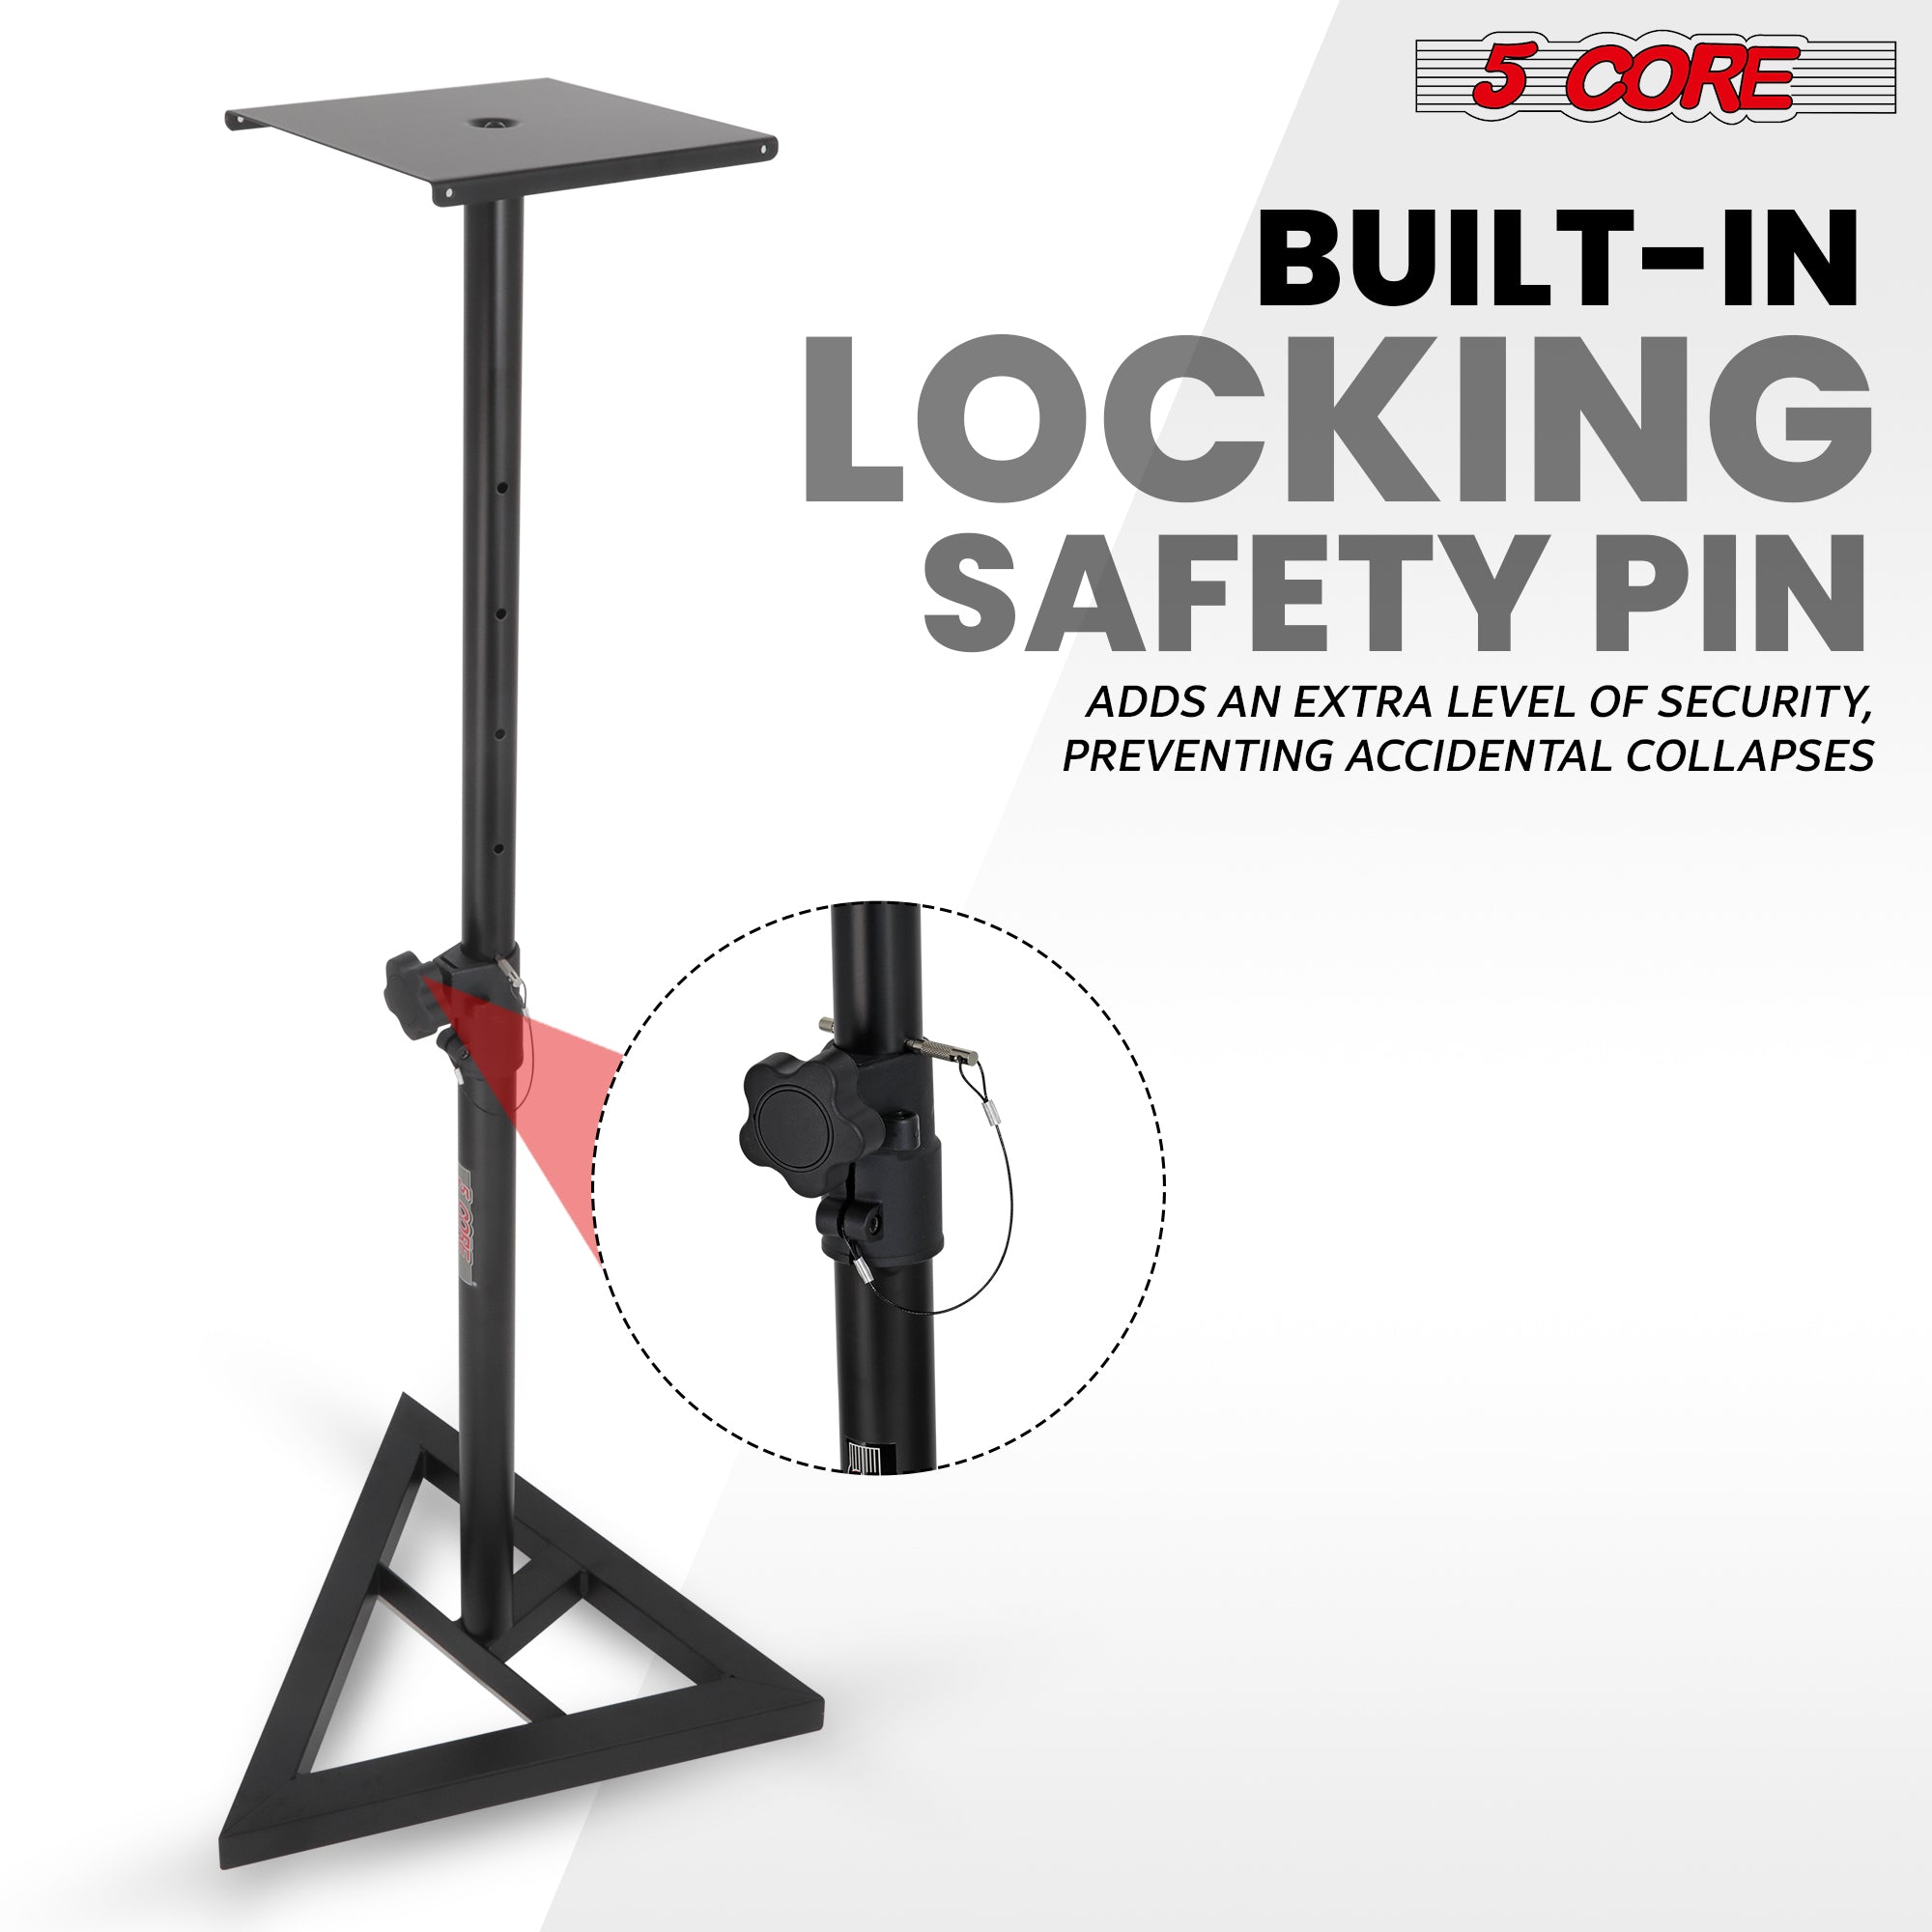 built-in locking safety pin